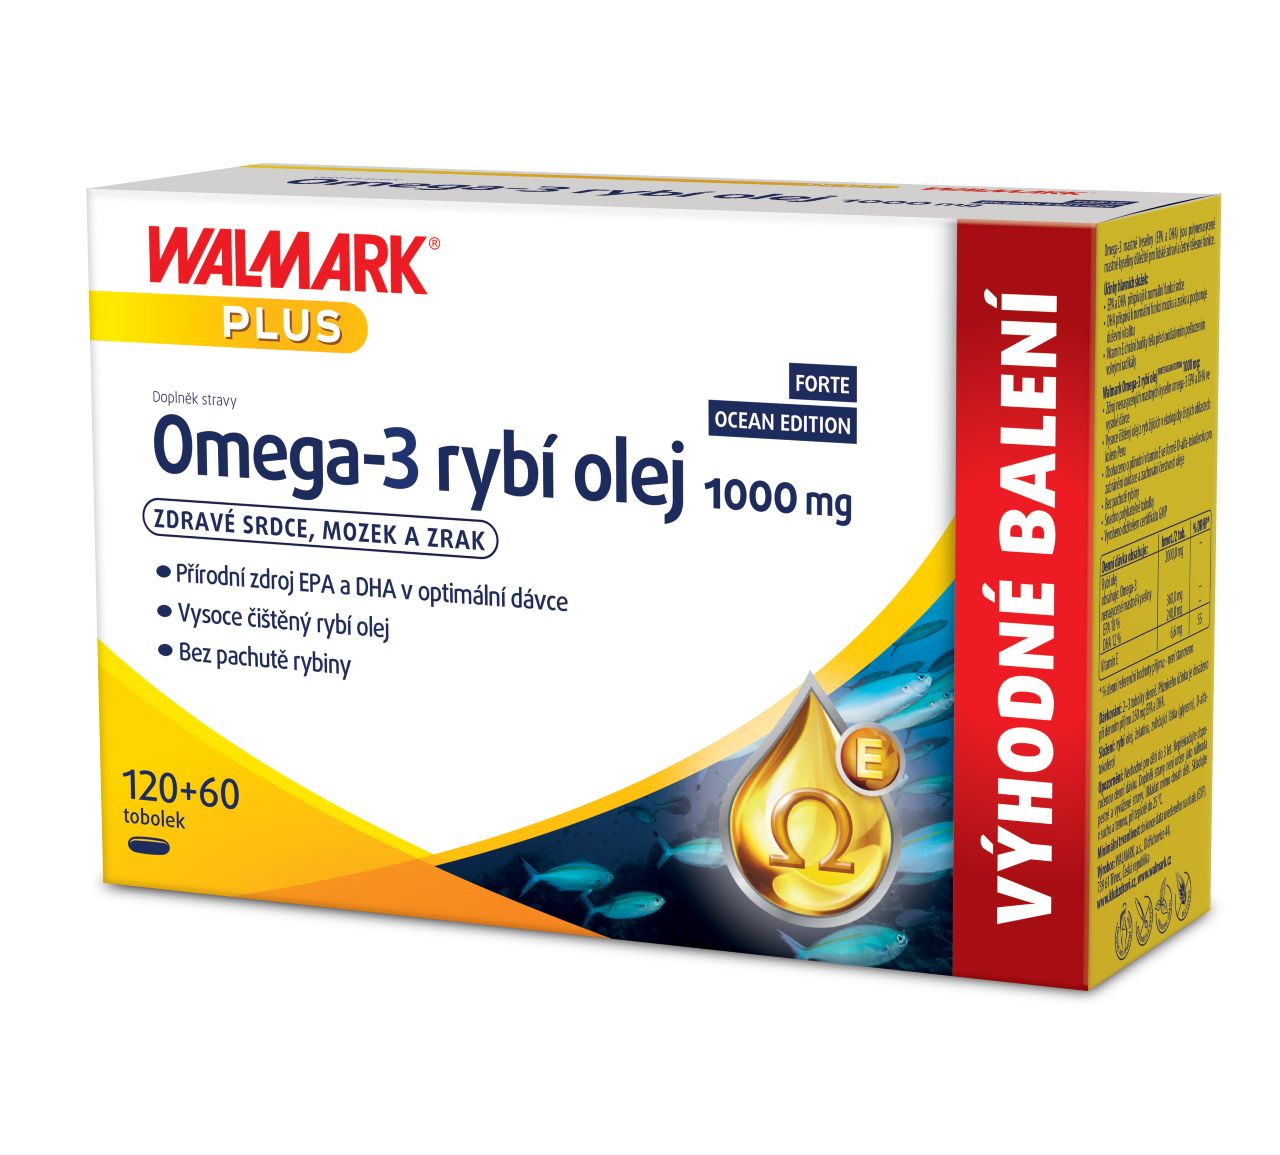 Walmark Omega-3 rybí olej FORTE OCEAN EDITION 1000 mg 120+60 tobolek Walmark